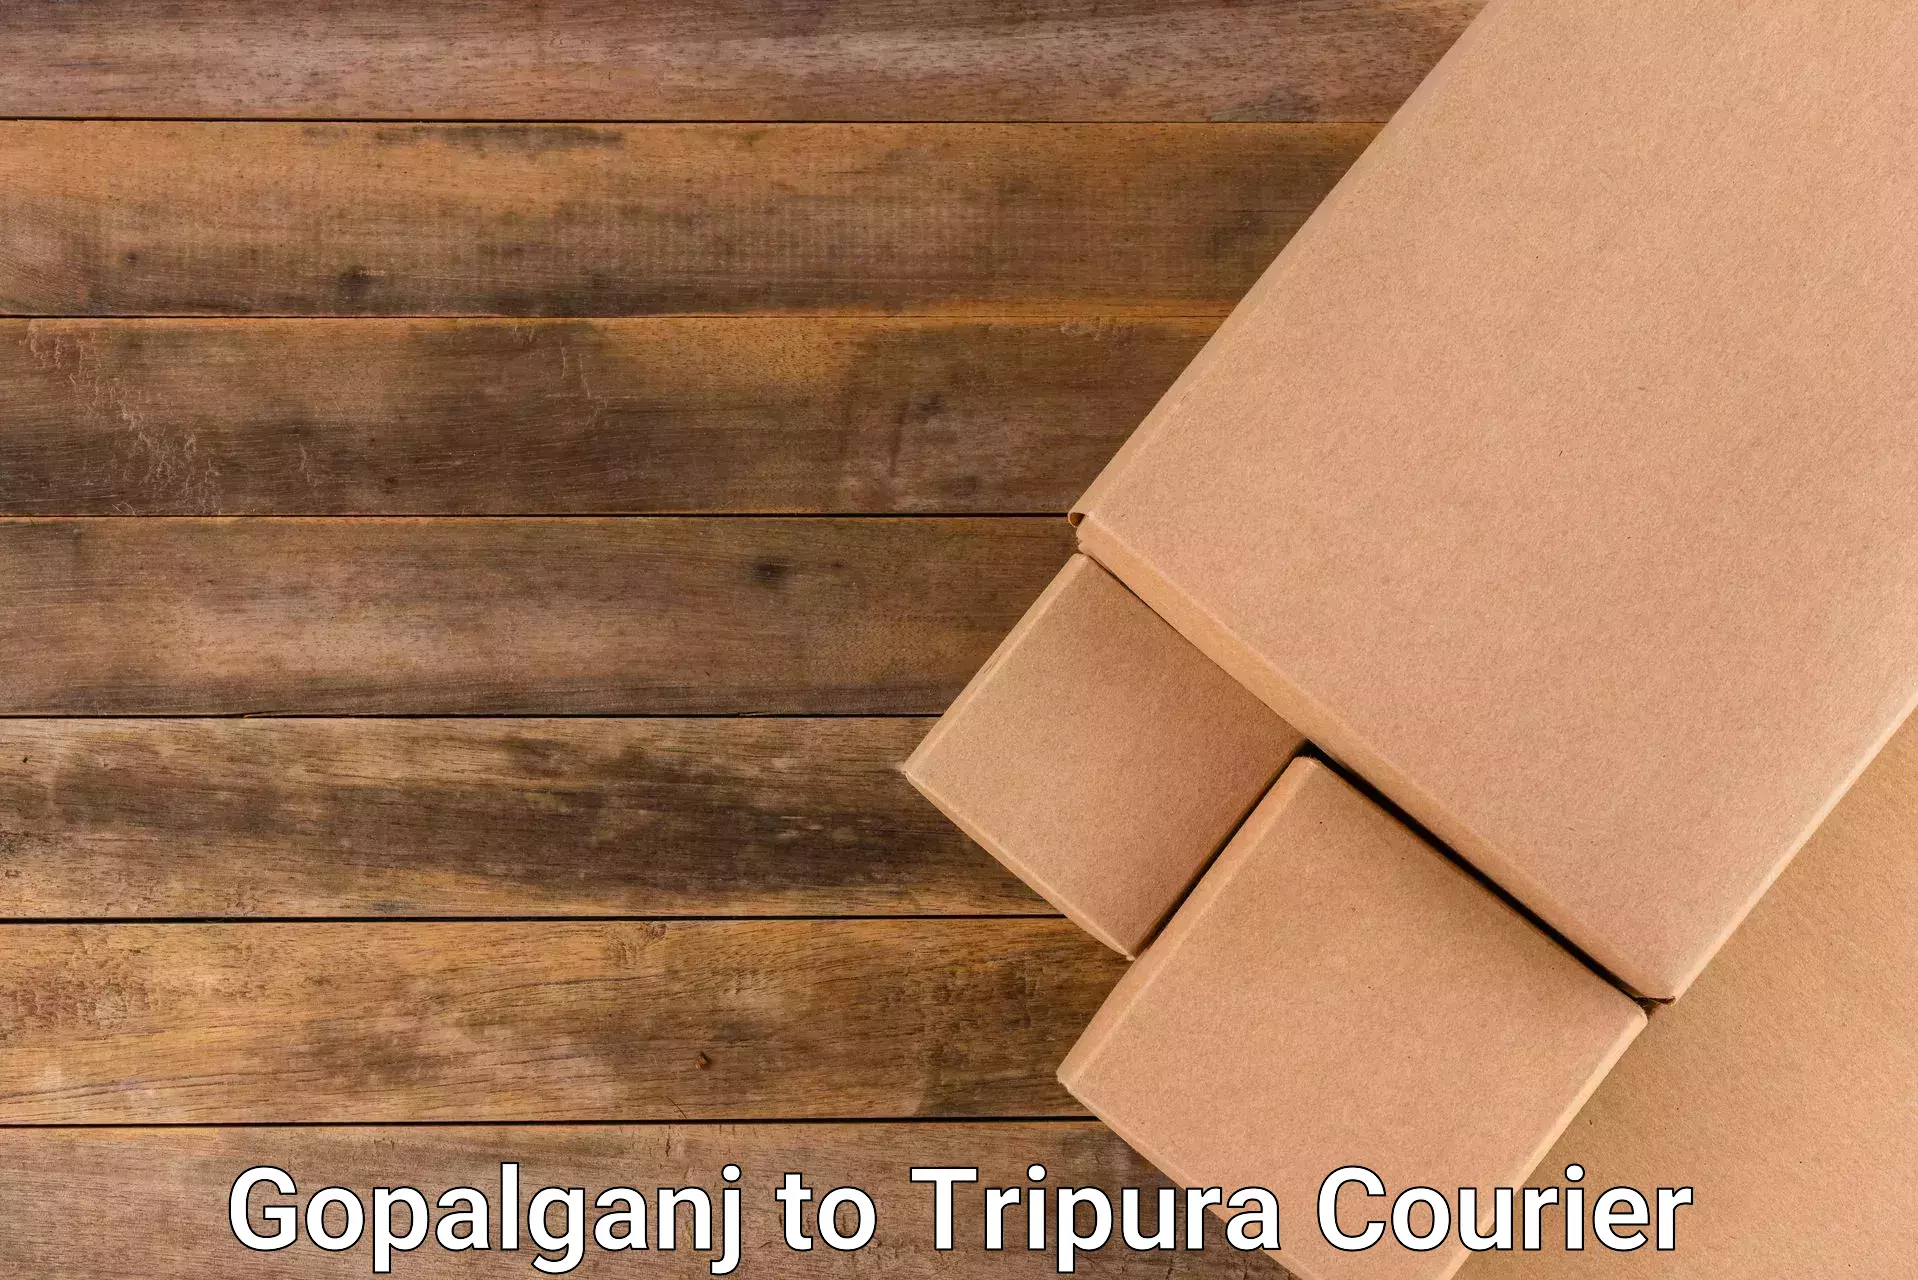 Courier service innovation Gopalganj to Amarpur